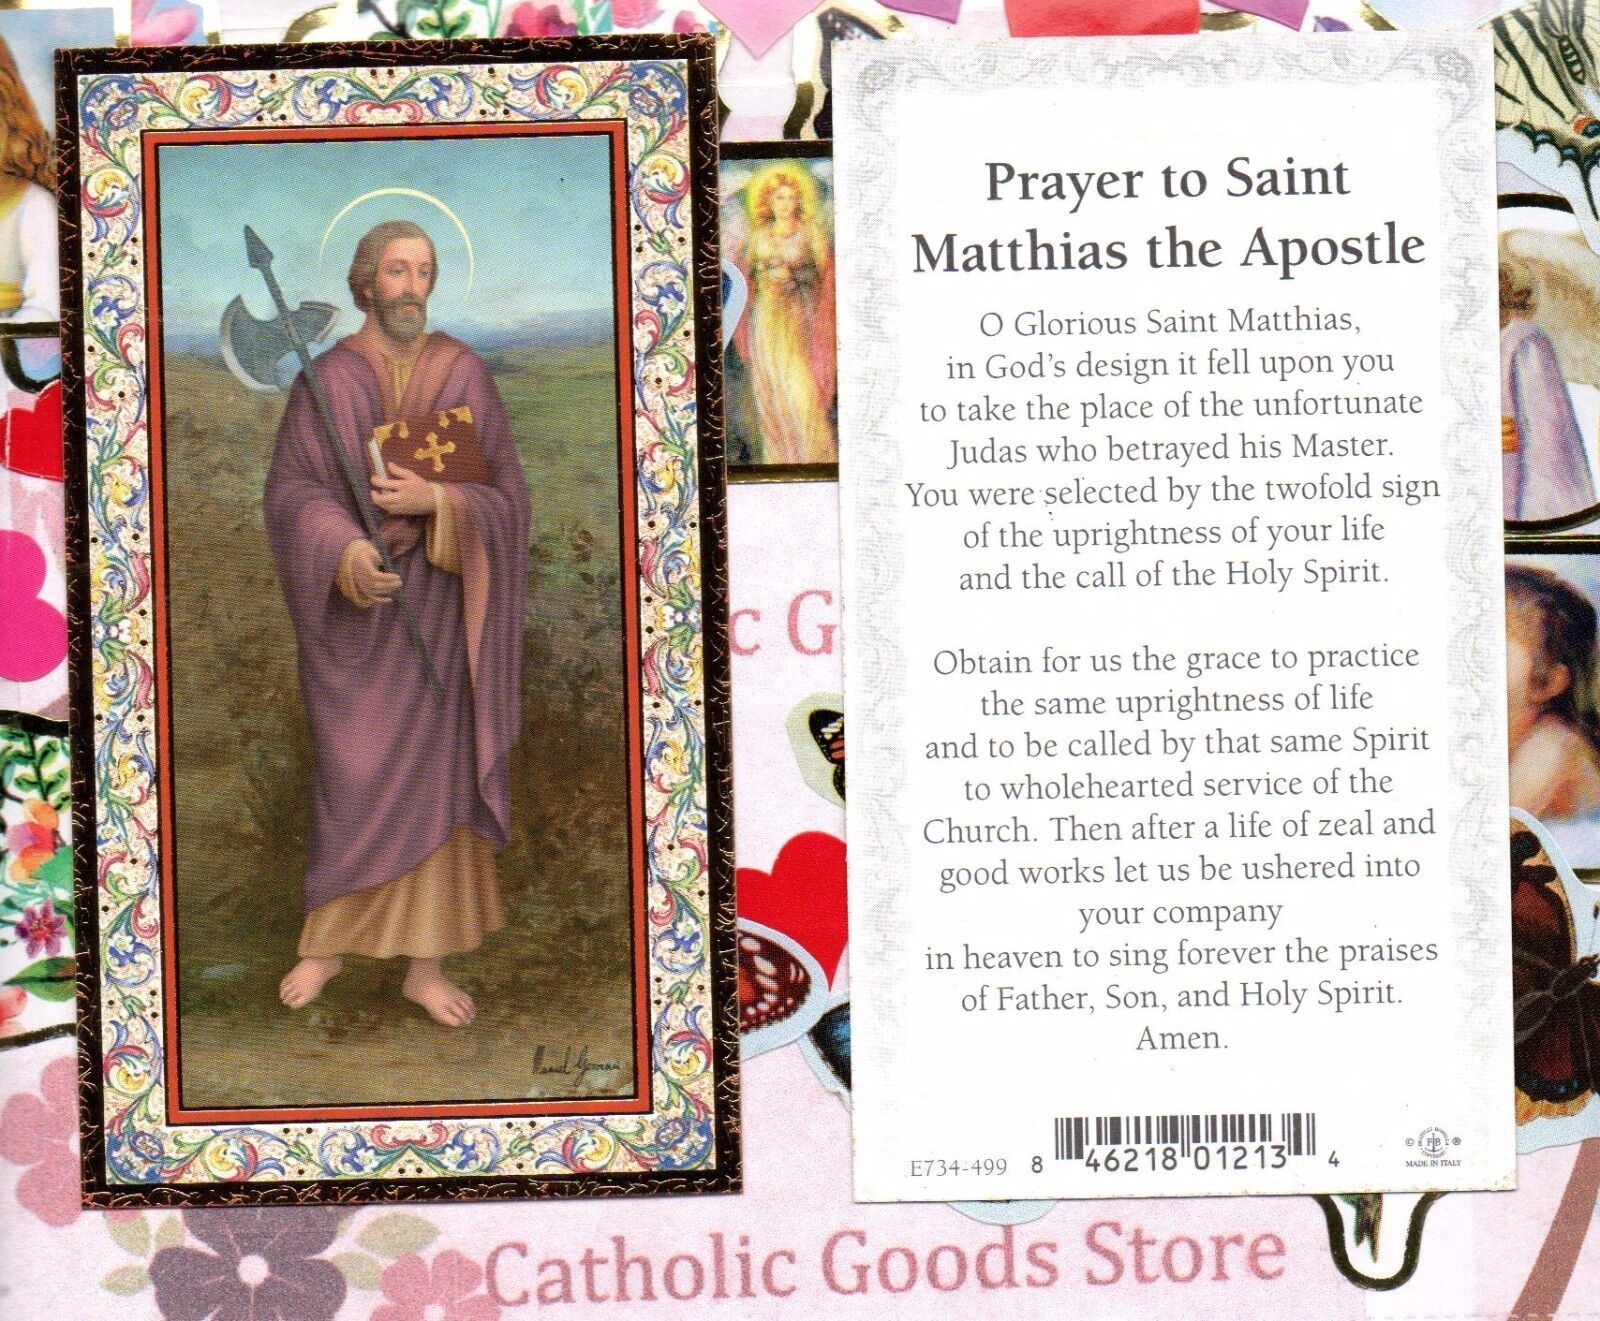 St. Matthias with Prayer to Saint Matthias  - Gold Trim - Paperstock Holy Card